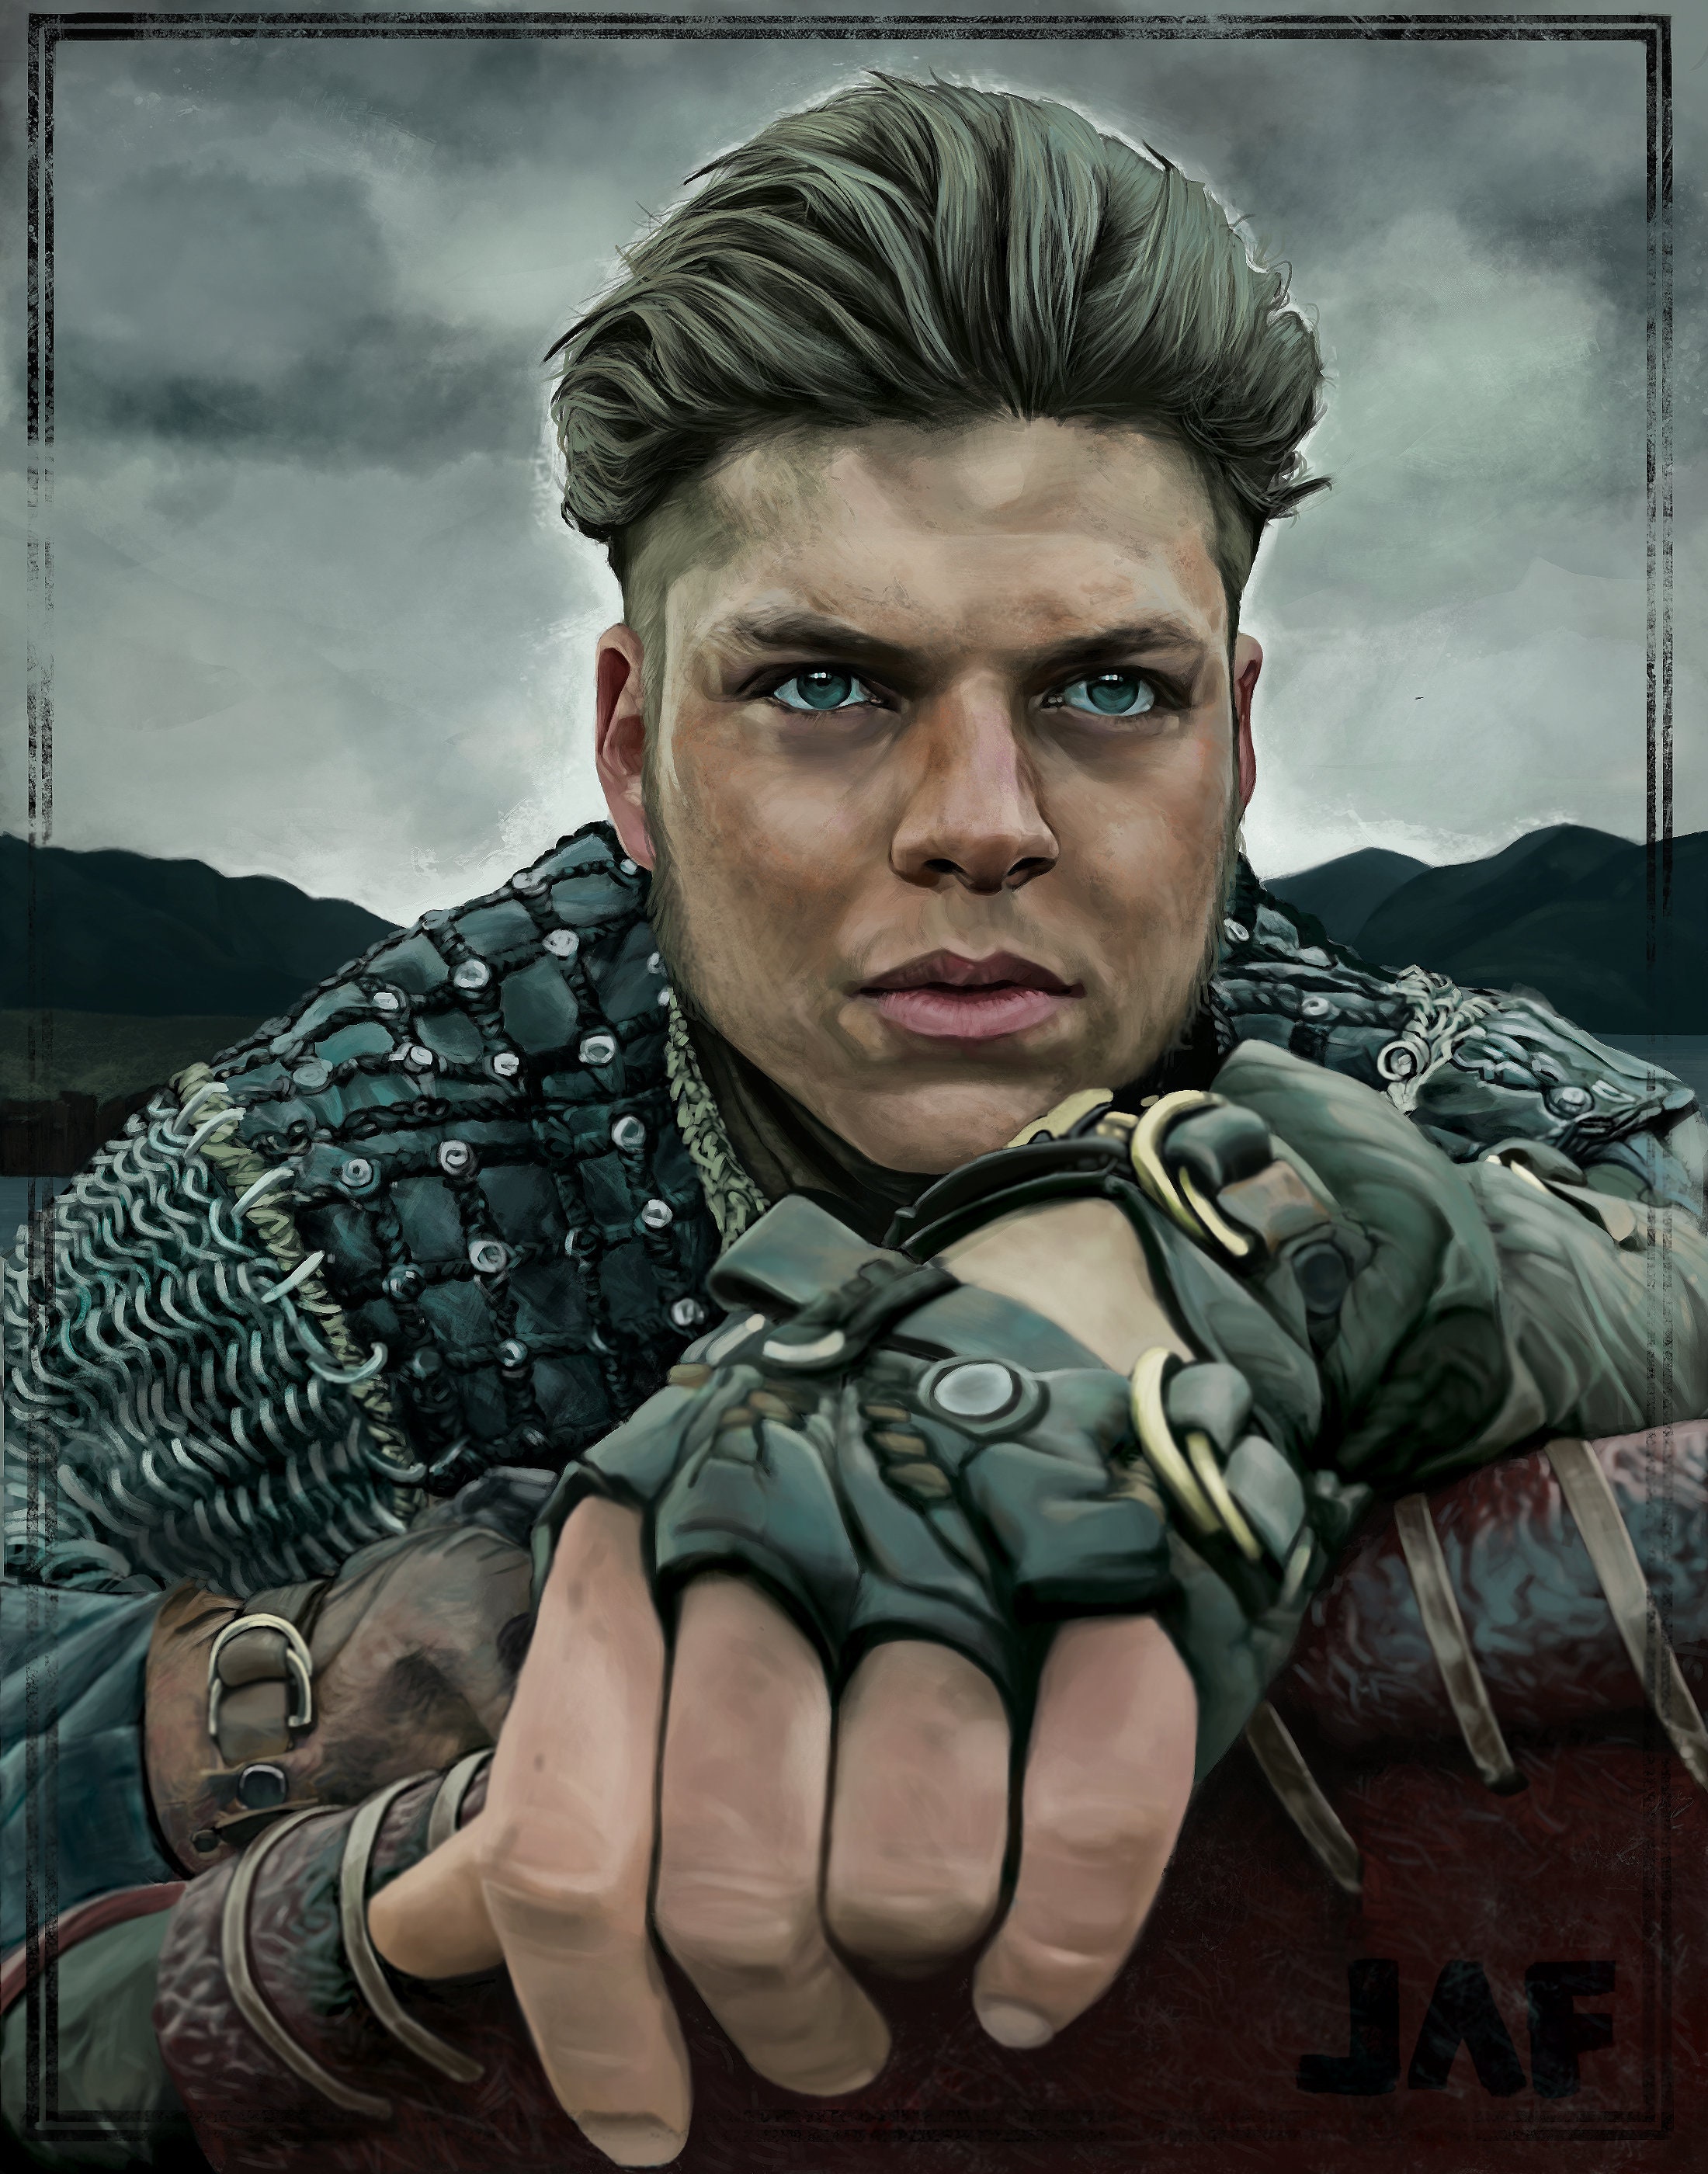 Rising of Ivar the Boneless: Vikings 